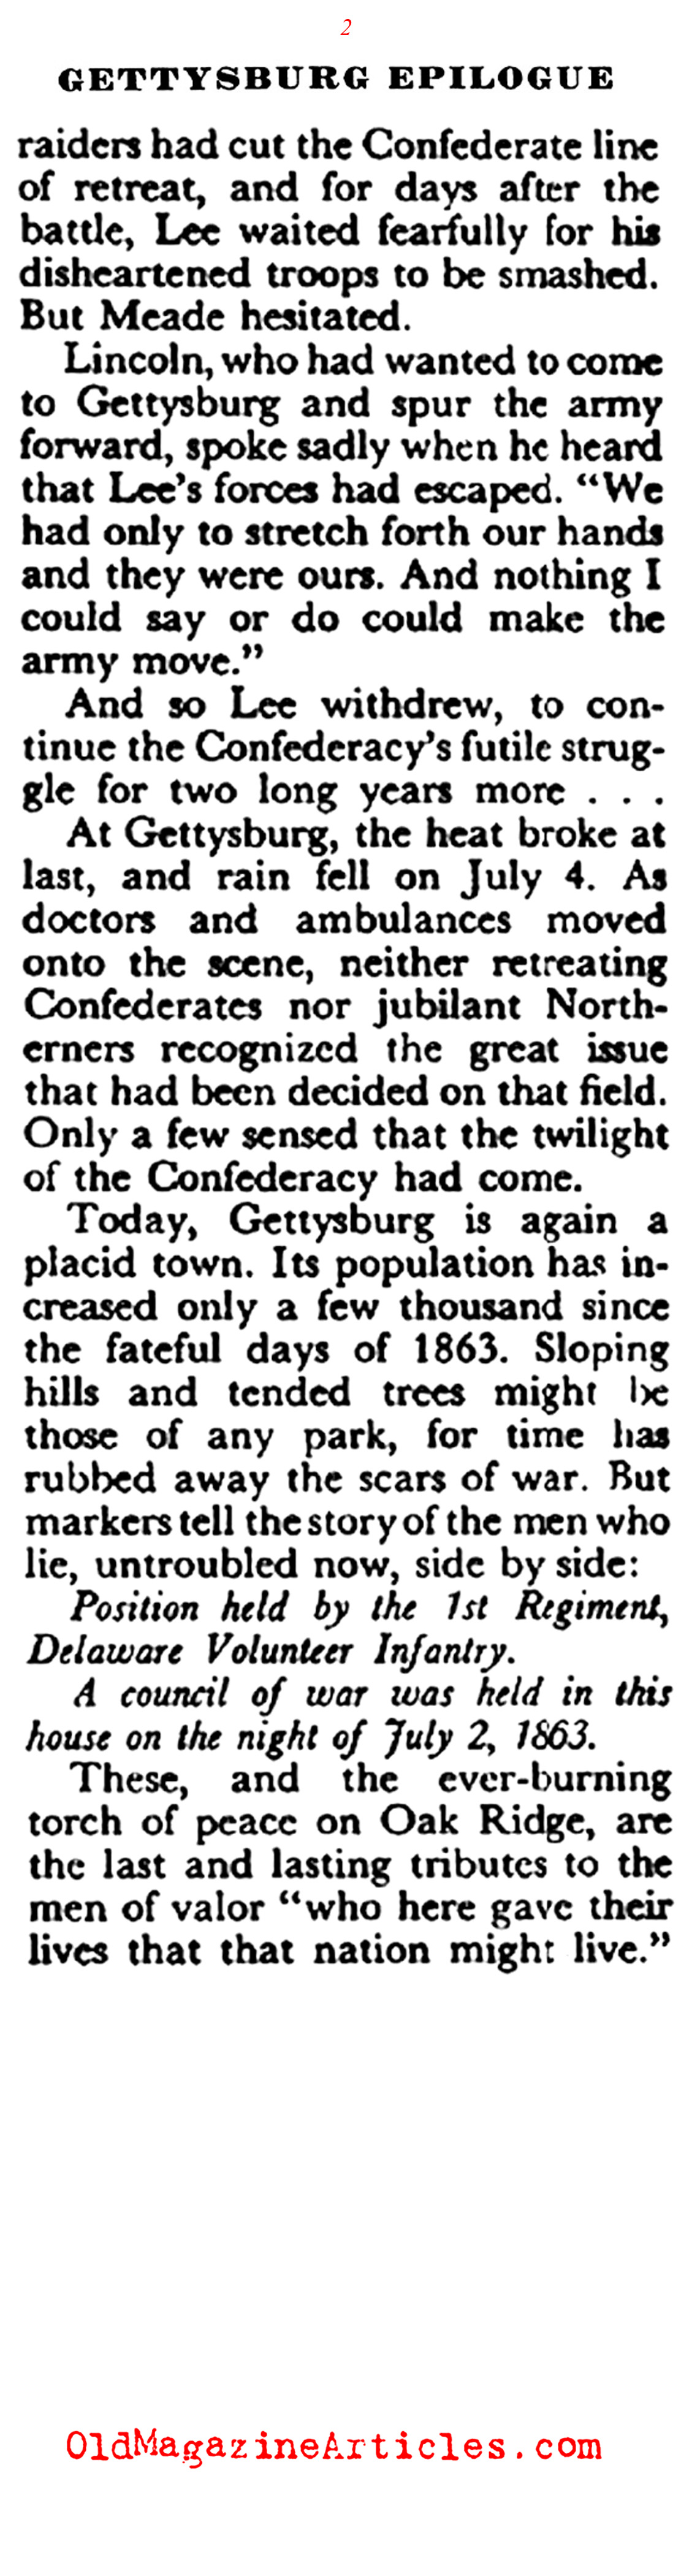 Gettysburg: an Epilogue (Coronet Magazine, 1949)